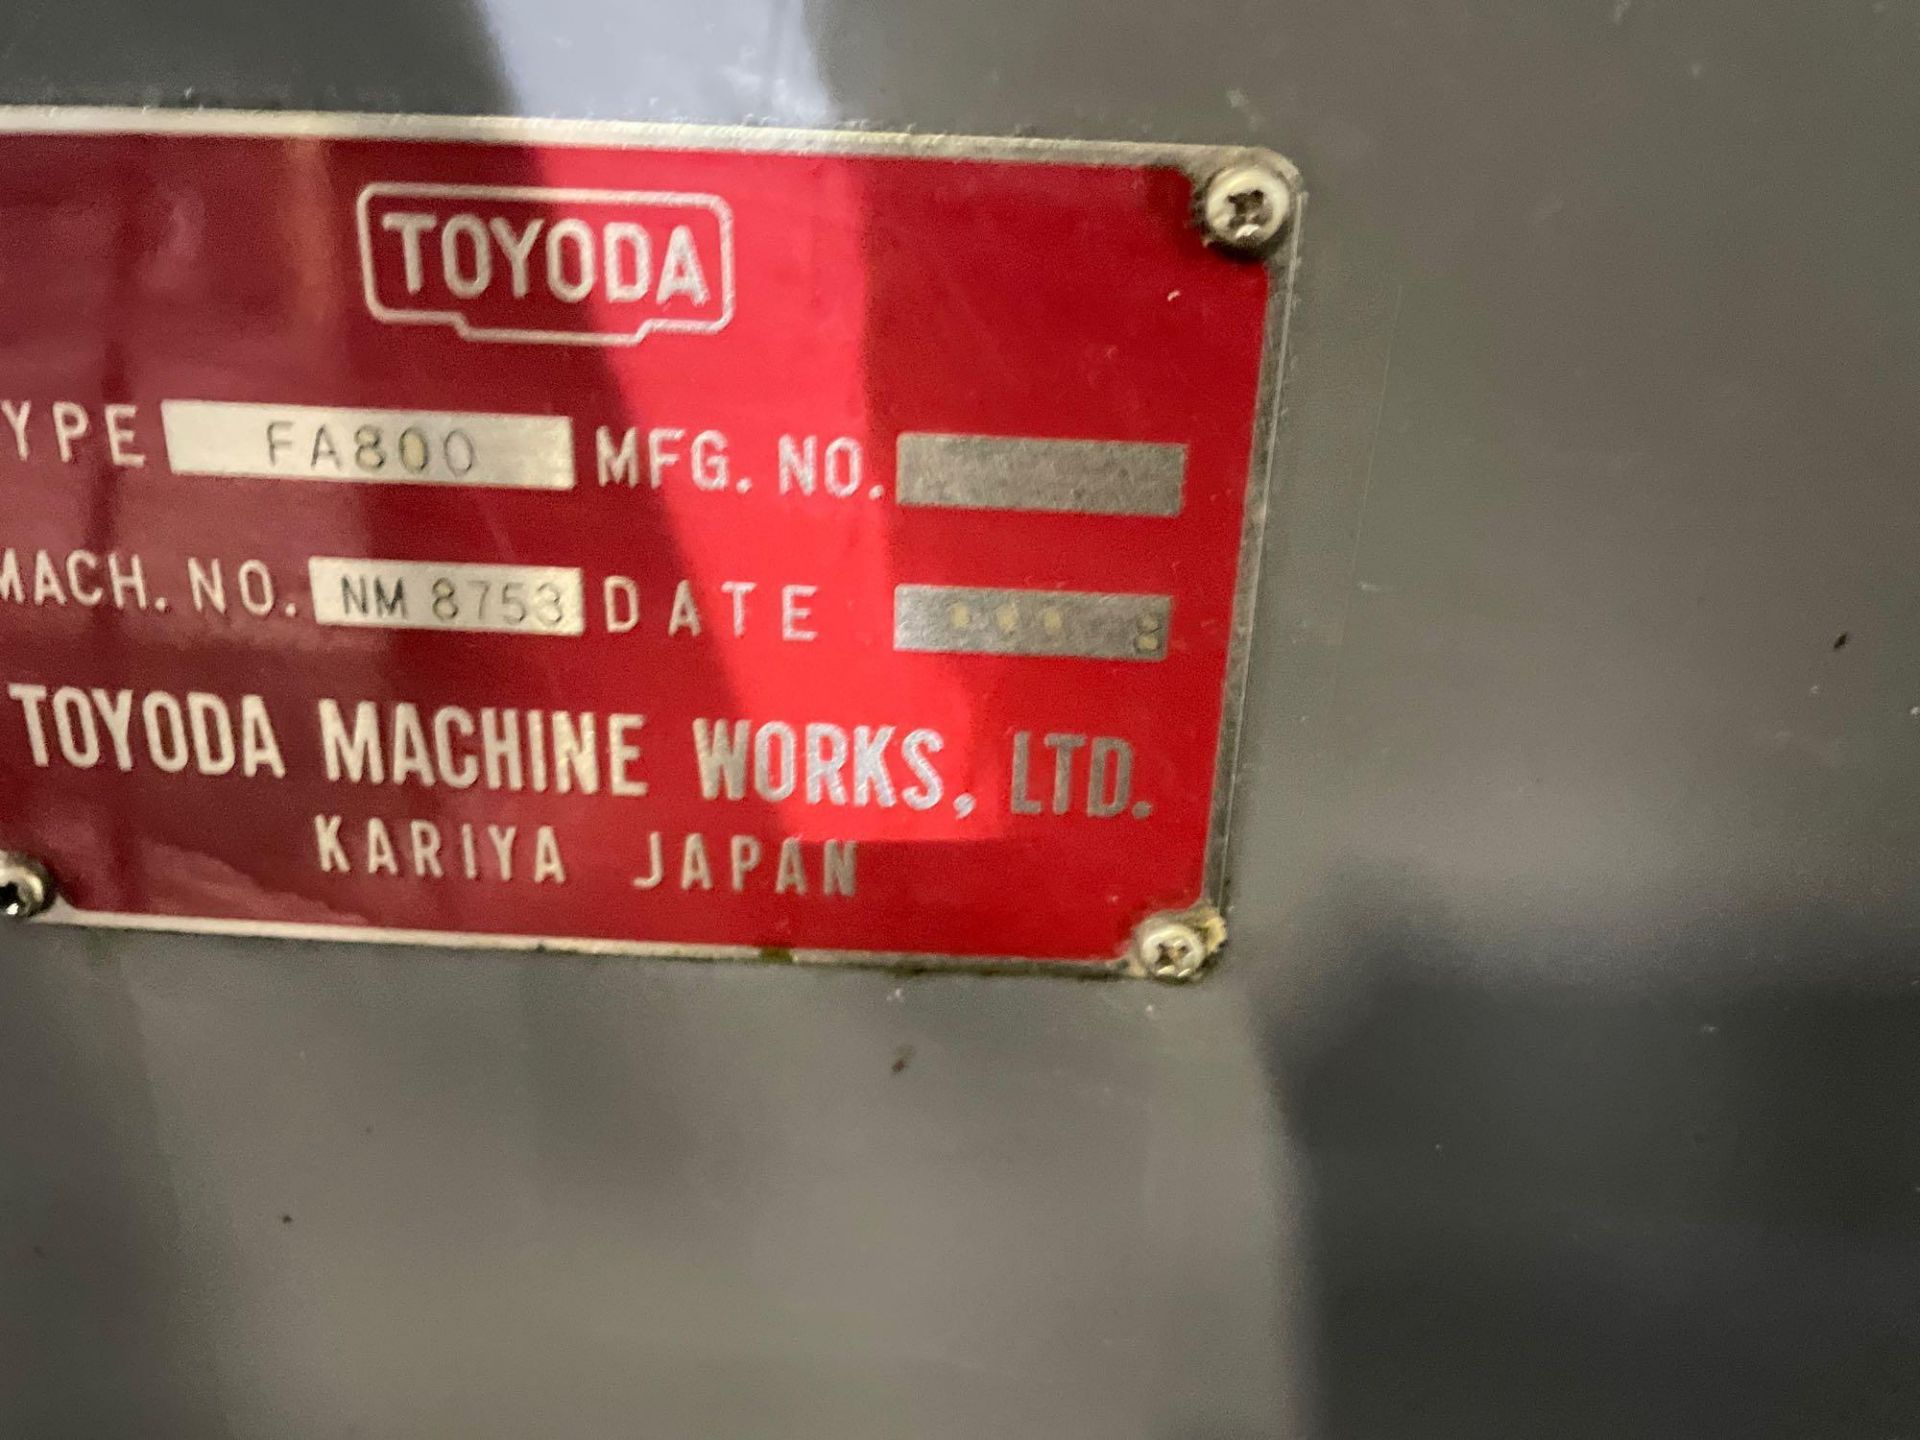 Toyoda FA-1050 4-axis, Fanuc 16i , 41" pllts, 10K RPM, CT50, 120 ATC, CTS, probe, New 1999 - Image 8 of 14